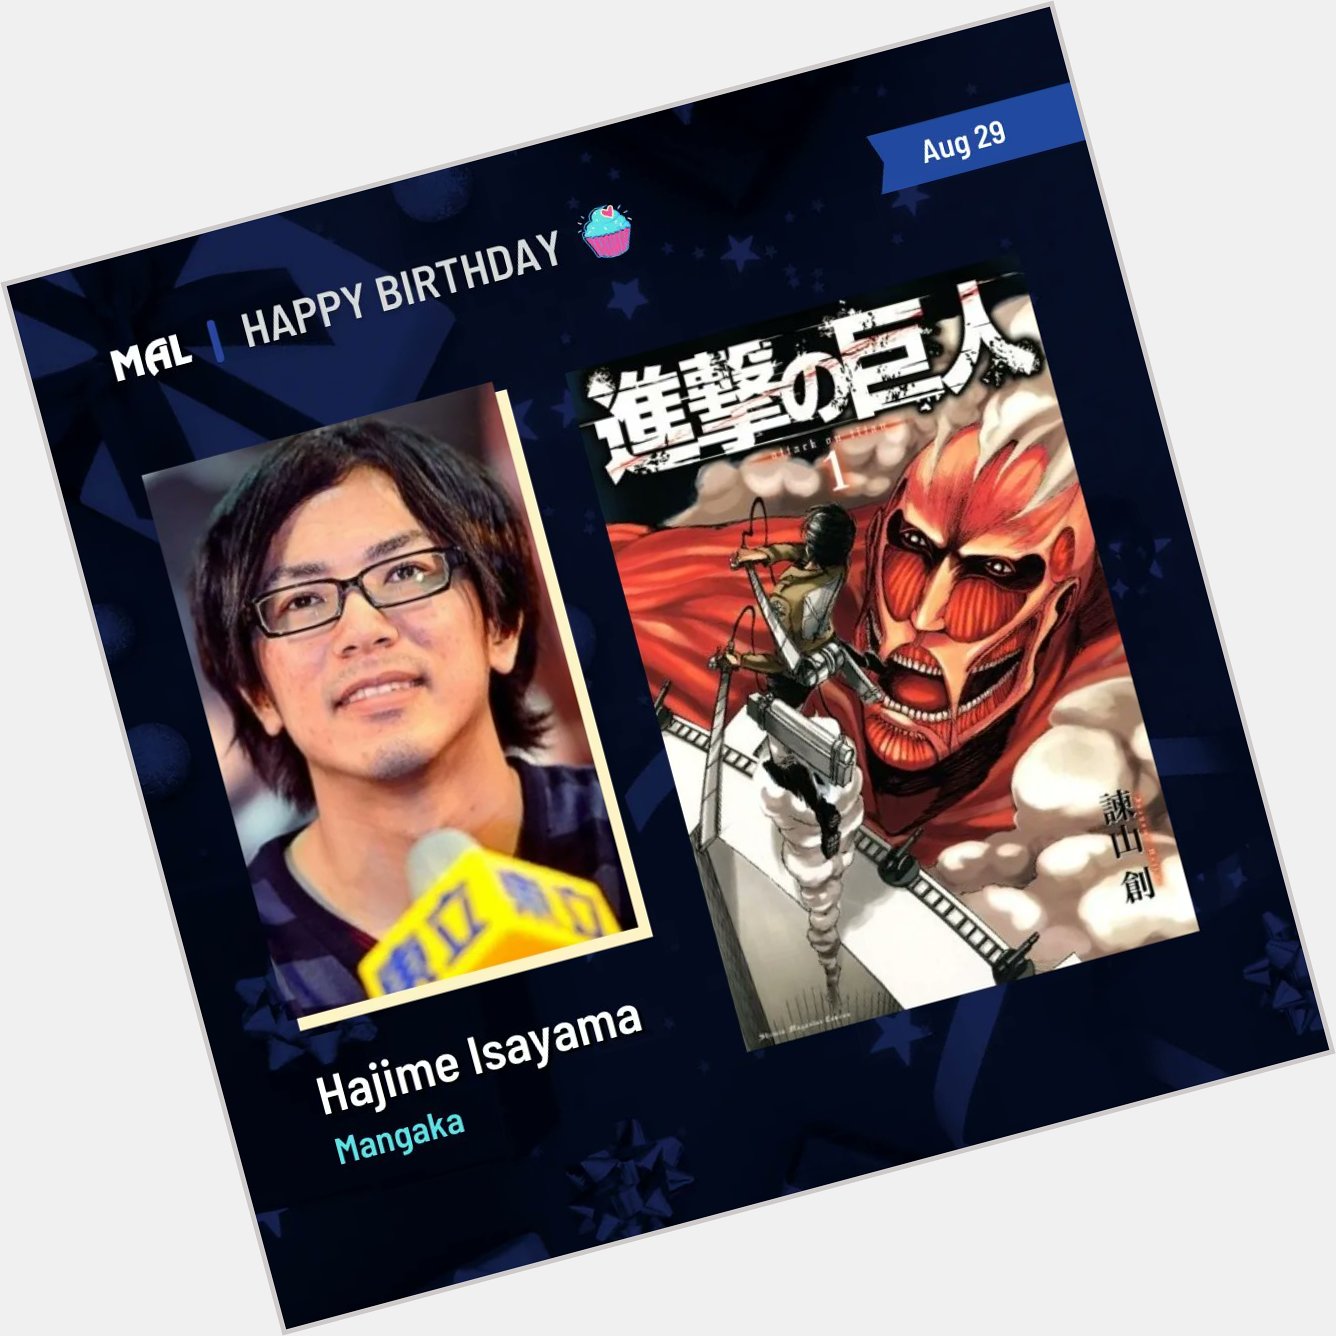 Happy birthday to Hajime Isayama! Full profile:  